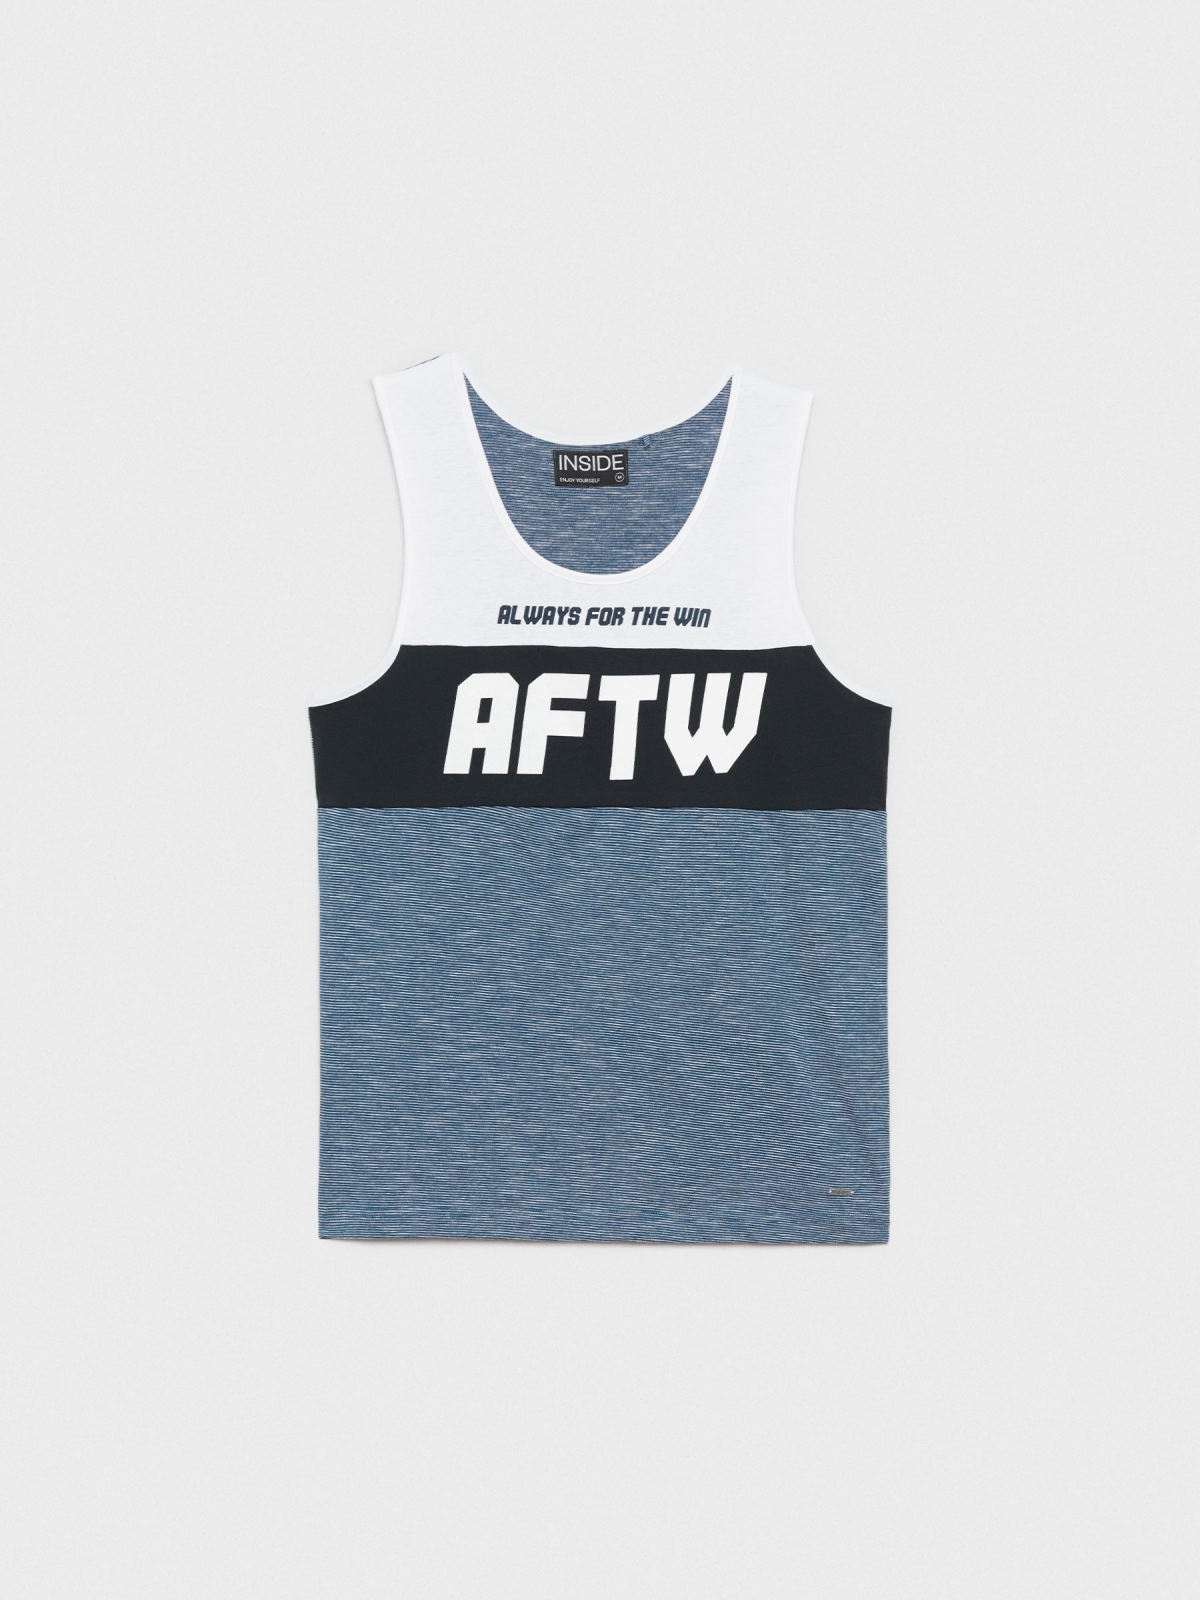  Camiseta de tirantes AFTW azul